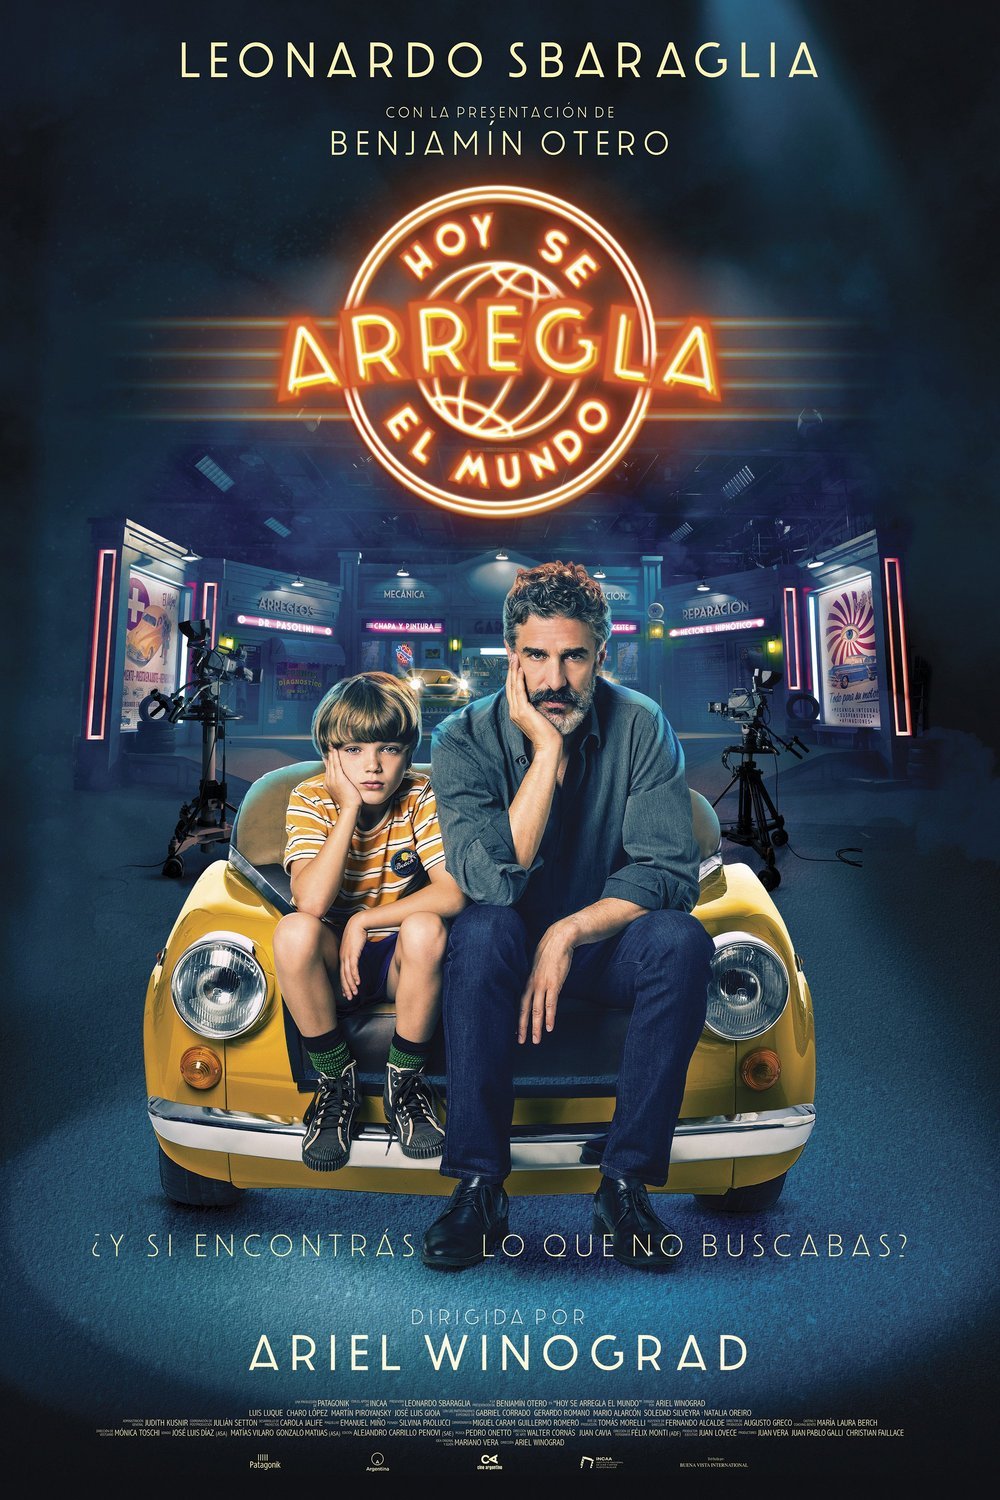 Spanish poster of the movie Hoy se arregla el mundo